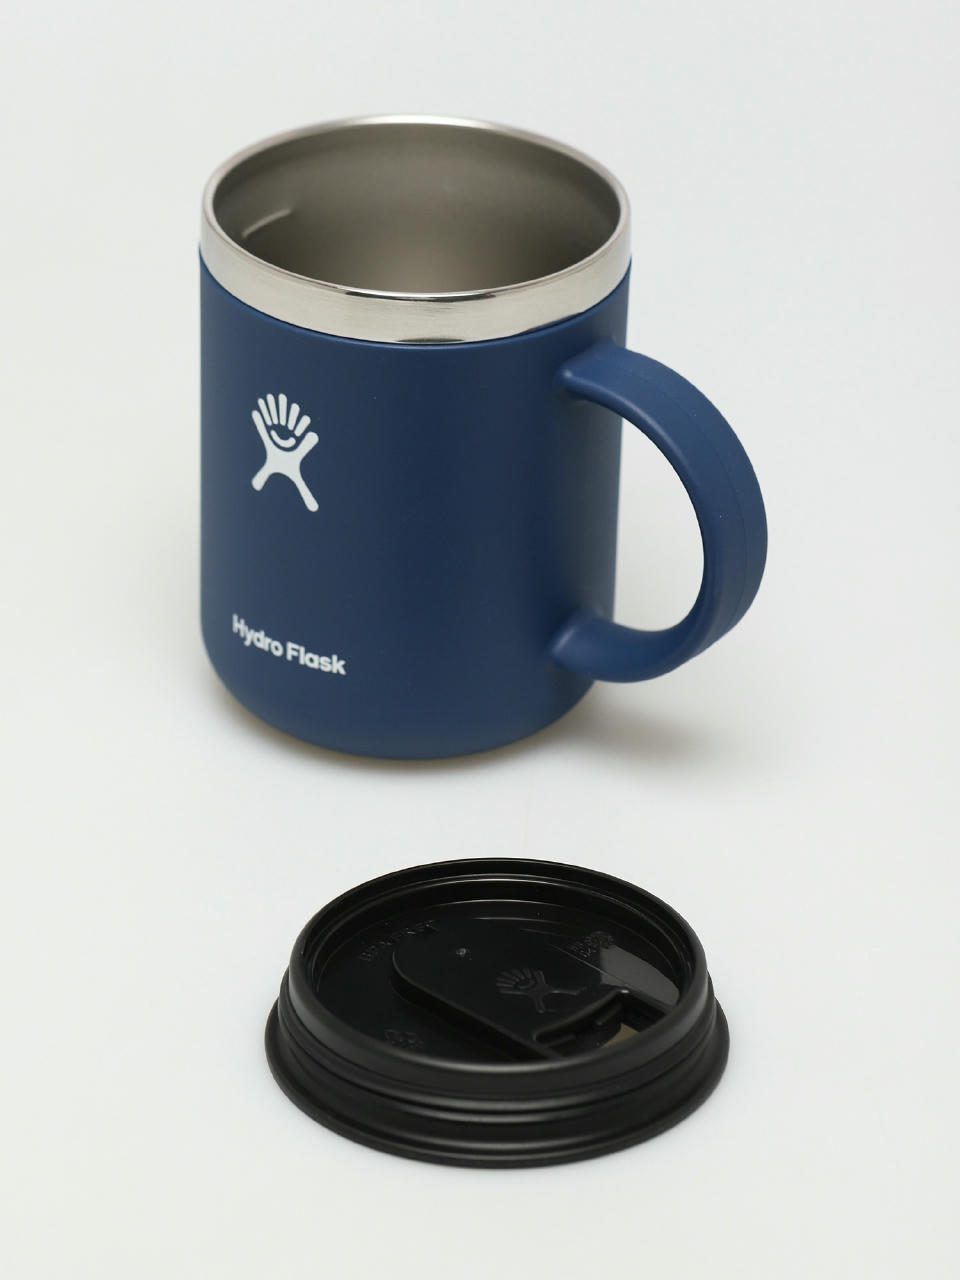 https://static.super-shop.com/1267093-hydro-flask-coffe-mug-354ml-cup-cobalt.jpg?w=960